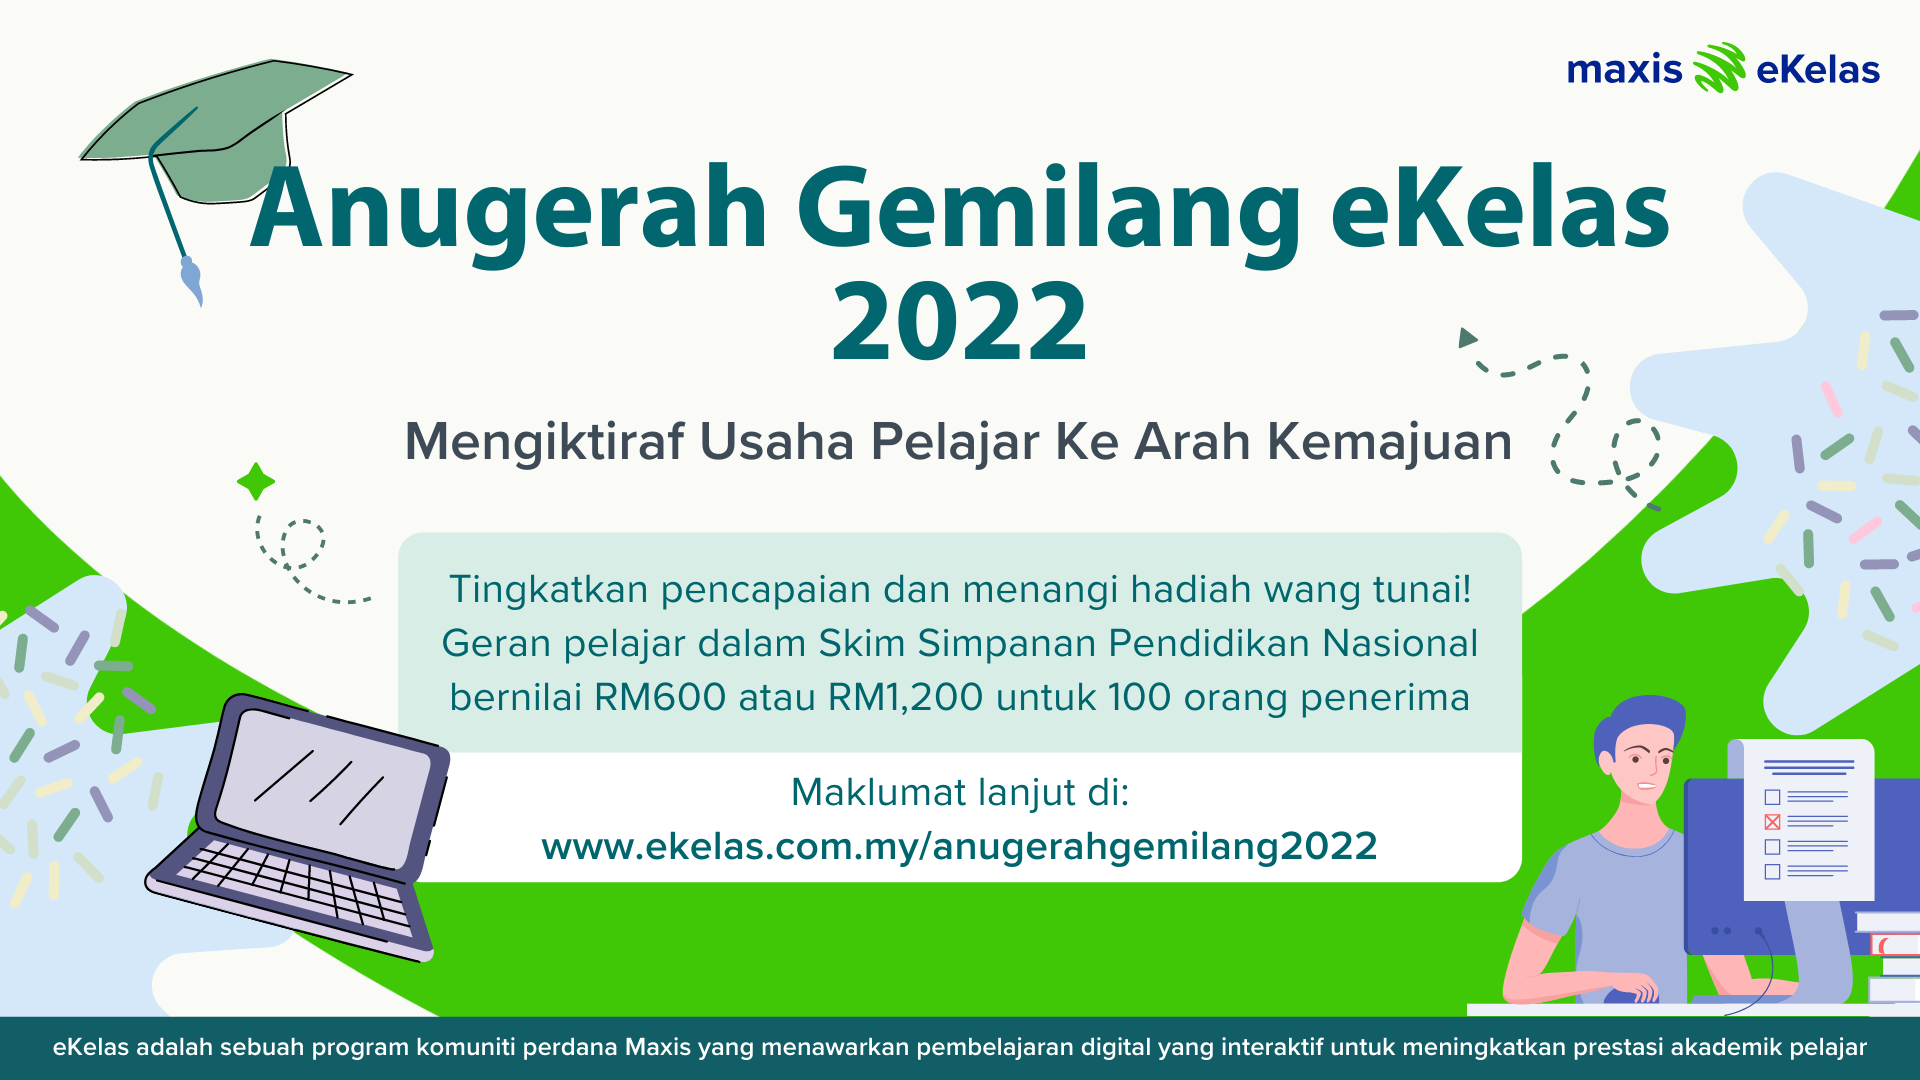 eKelas is bringing back Anugerah Gemilang student grant to reward most progressed students in the programme!